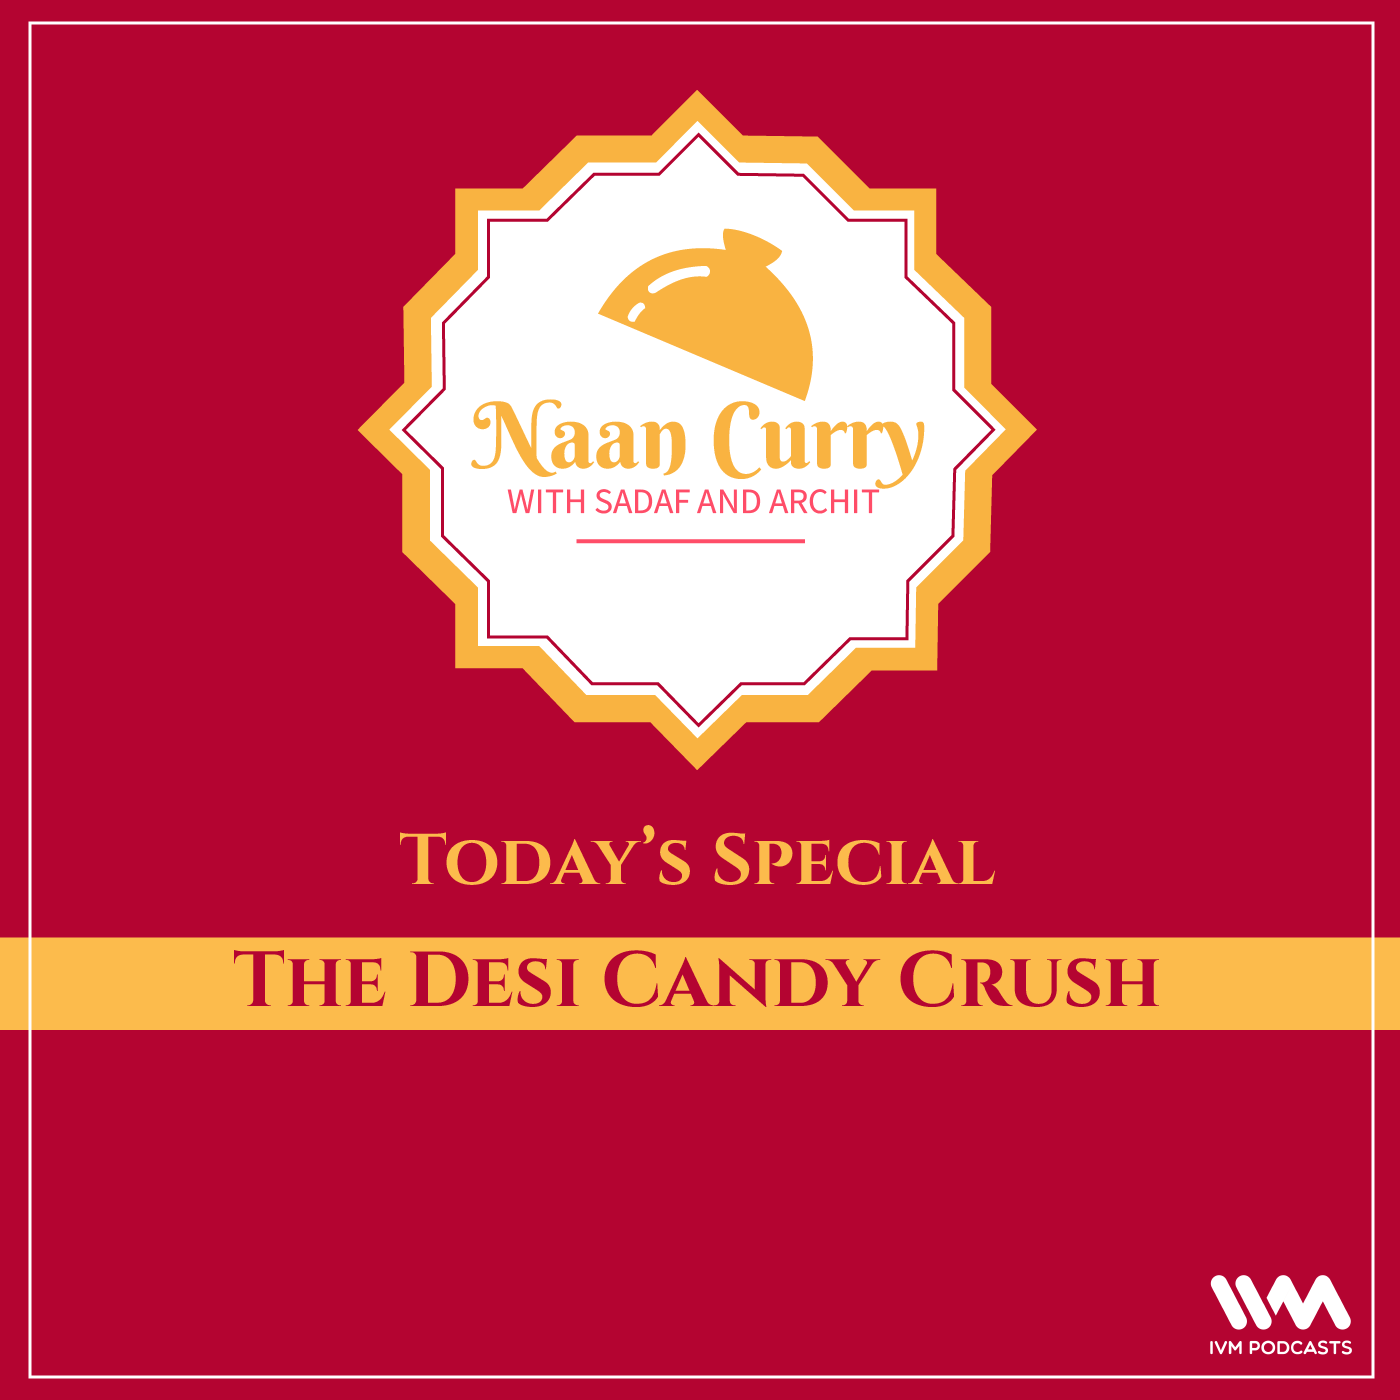 The Desi Candy Crush